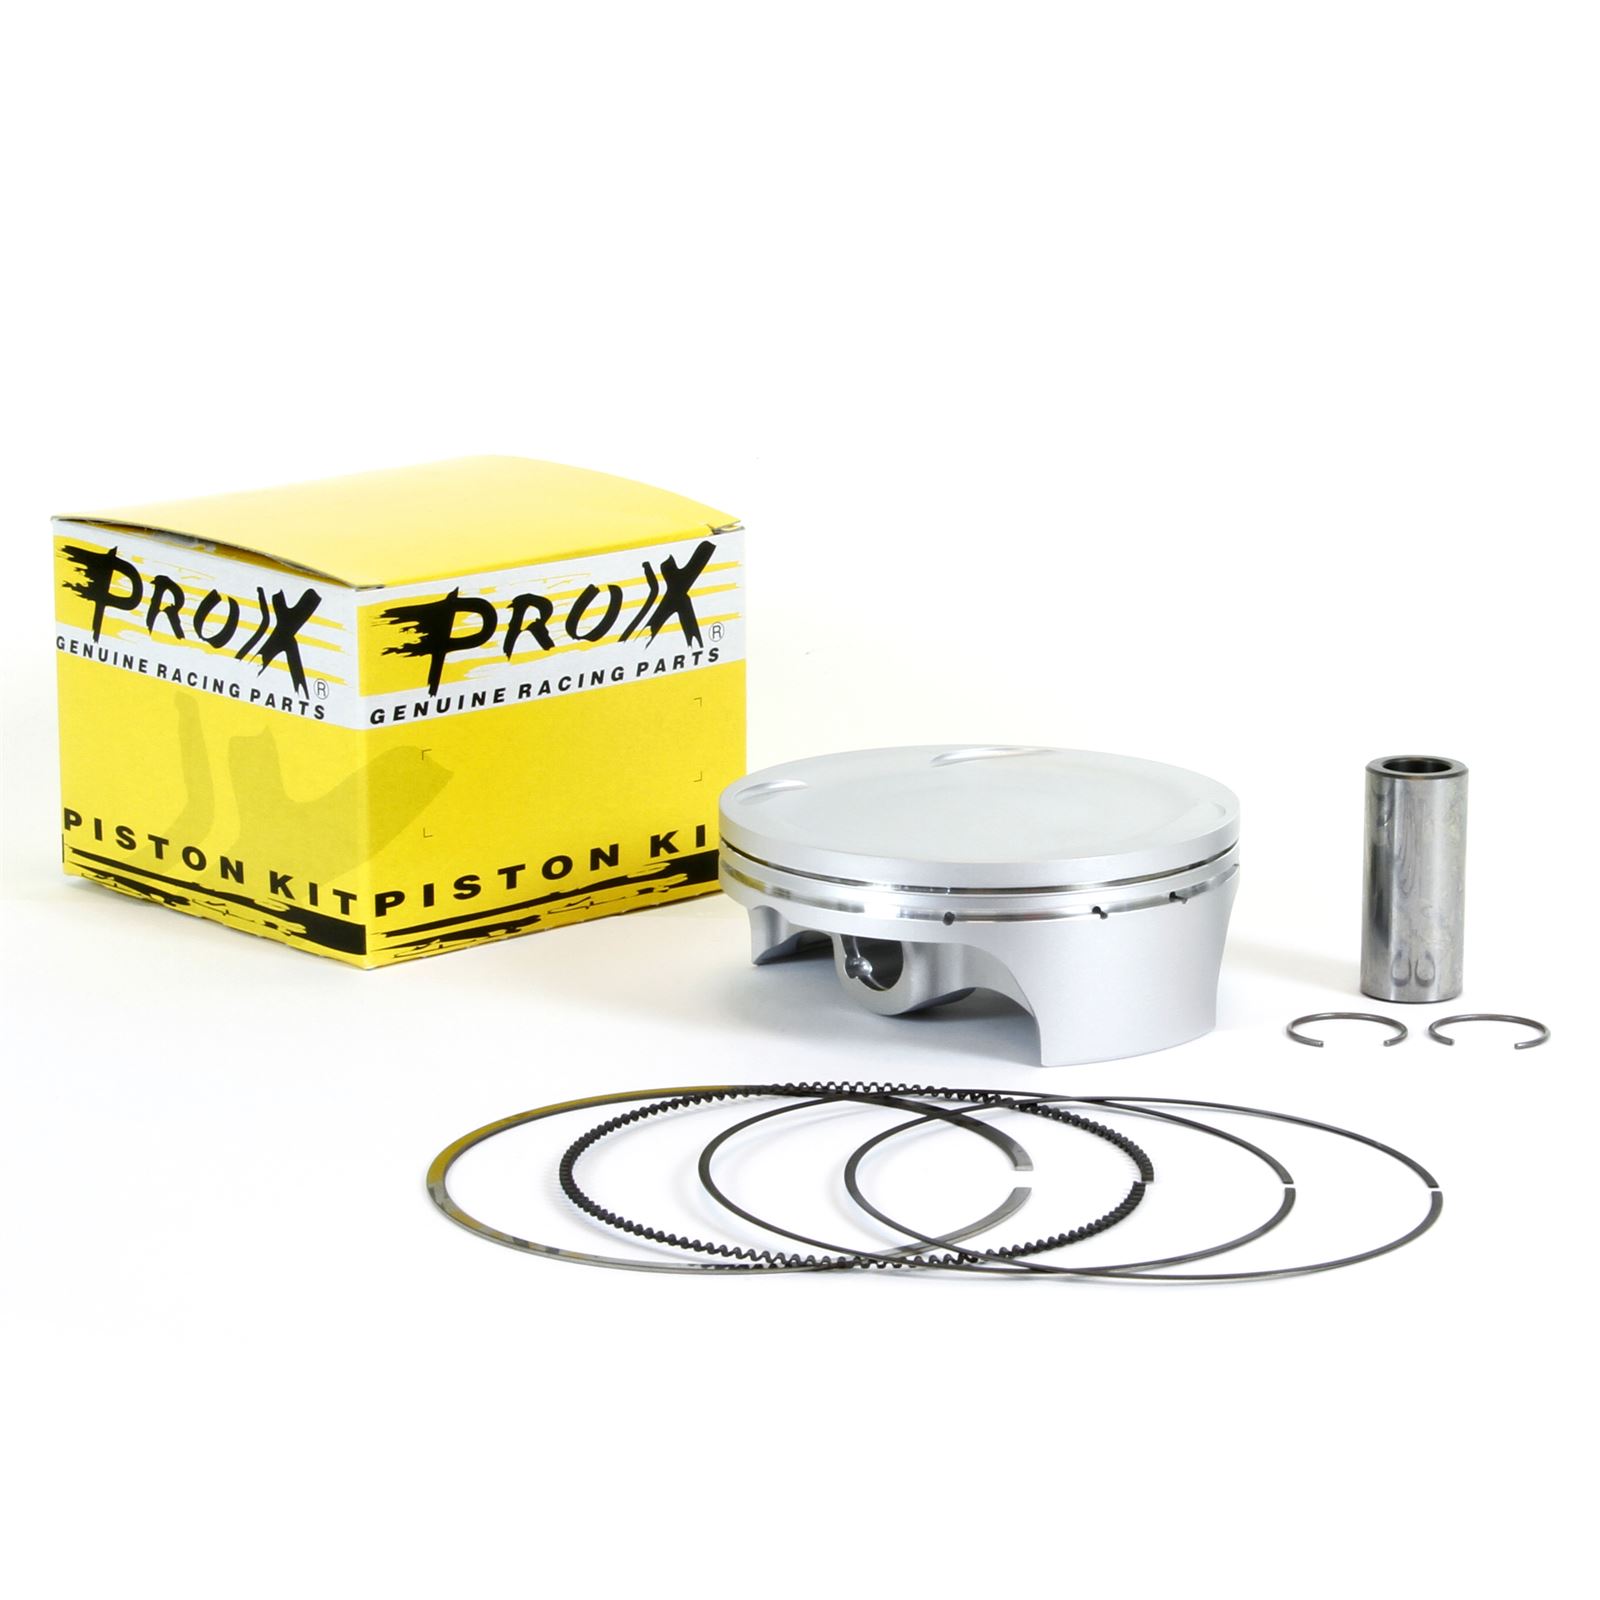 Prox Racing Parts 01.2707.A Piston Kit 